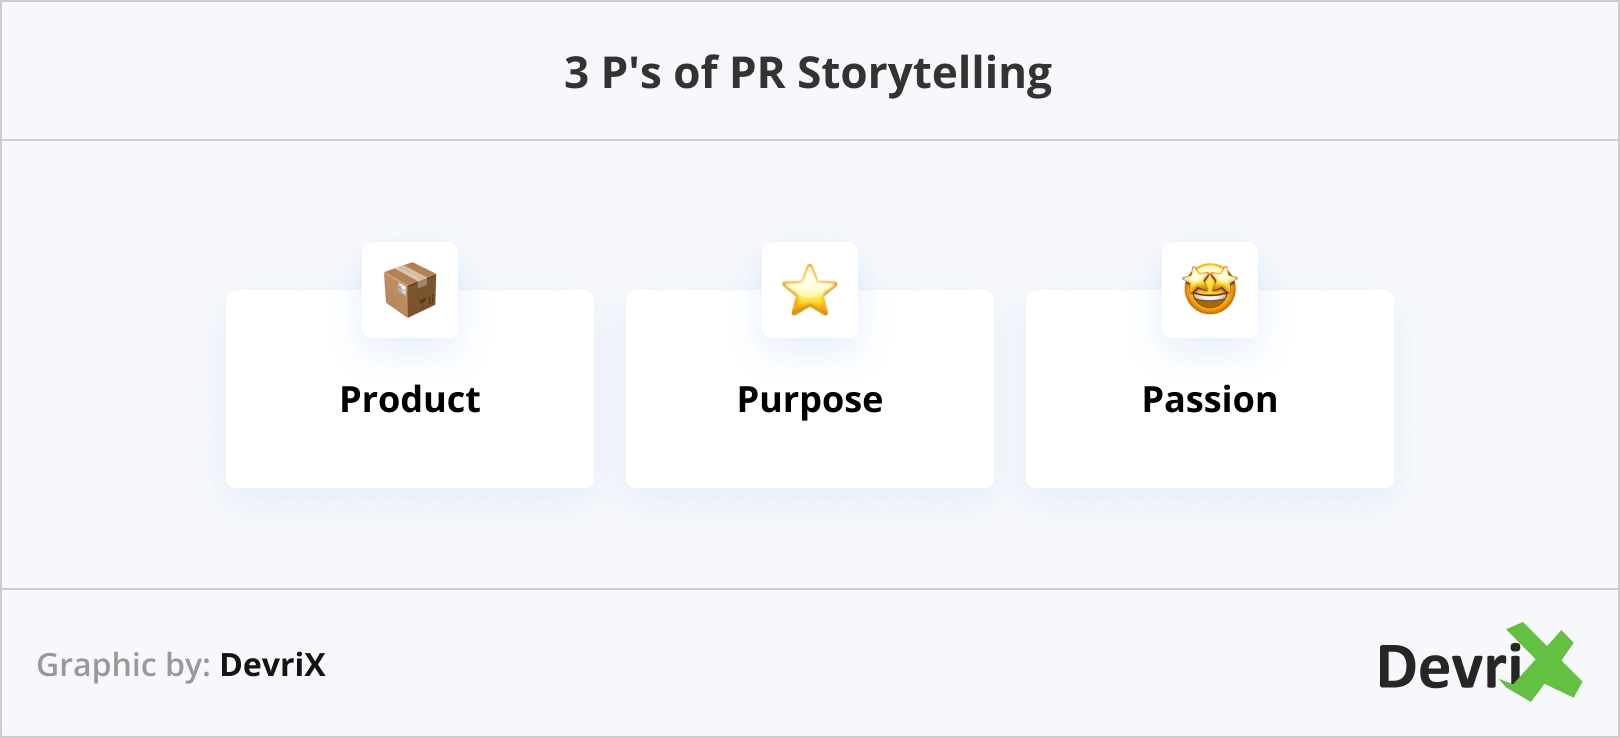 3 P's of PR Storytelling